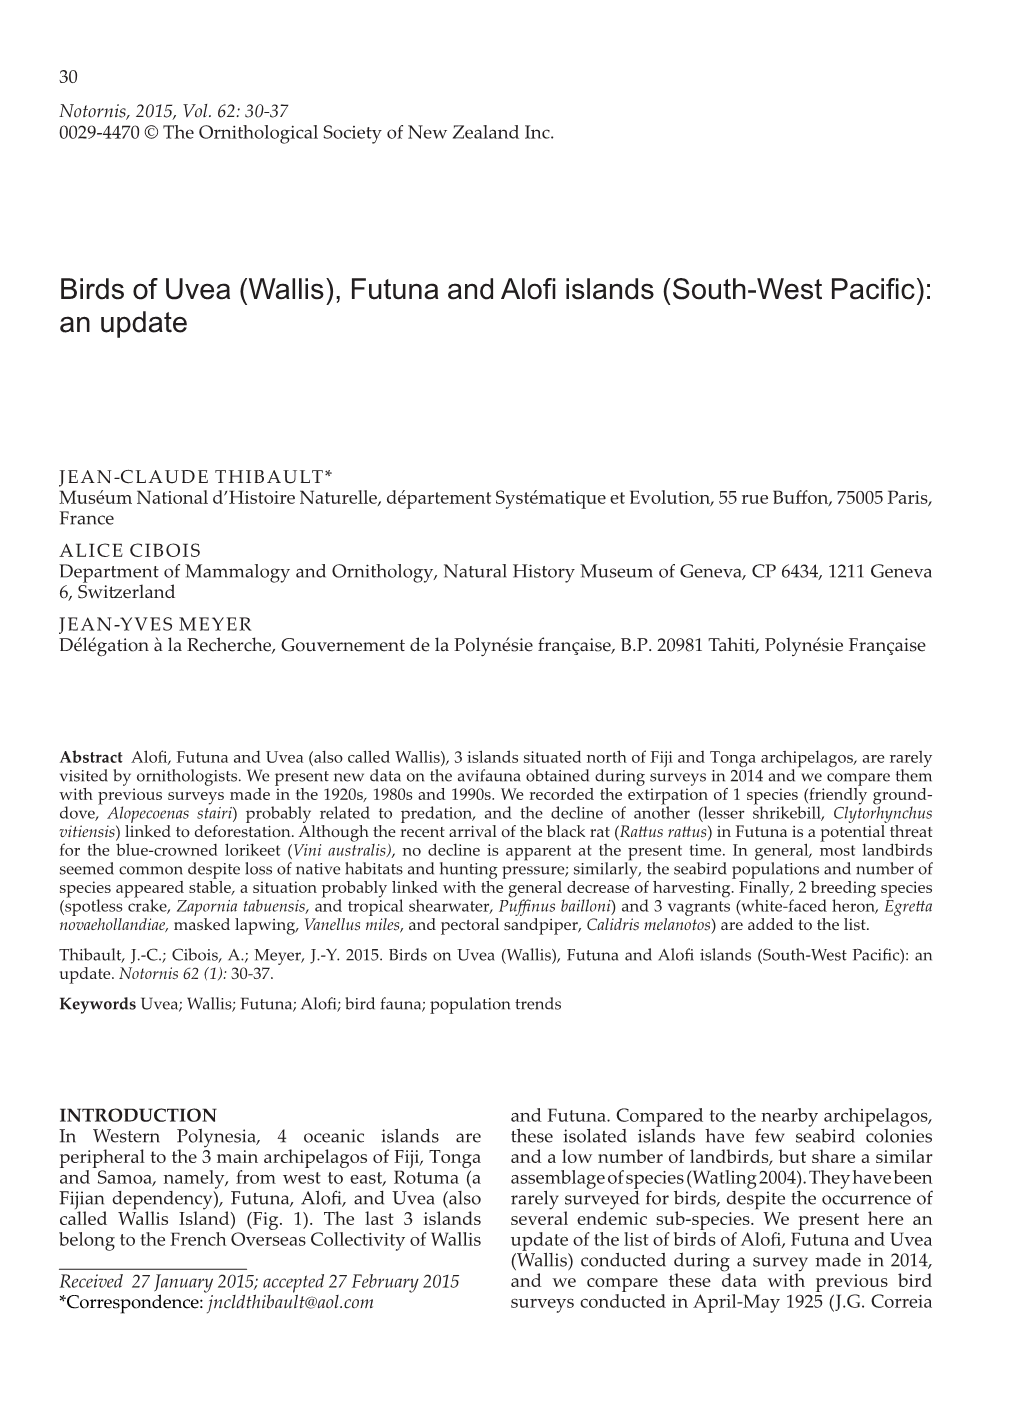 (Wallis), Futuna and Alofi Islands (South-West Pacific): an Update